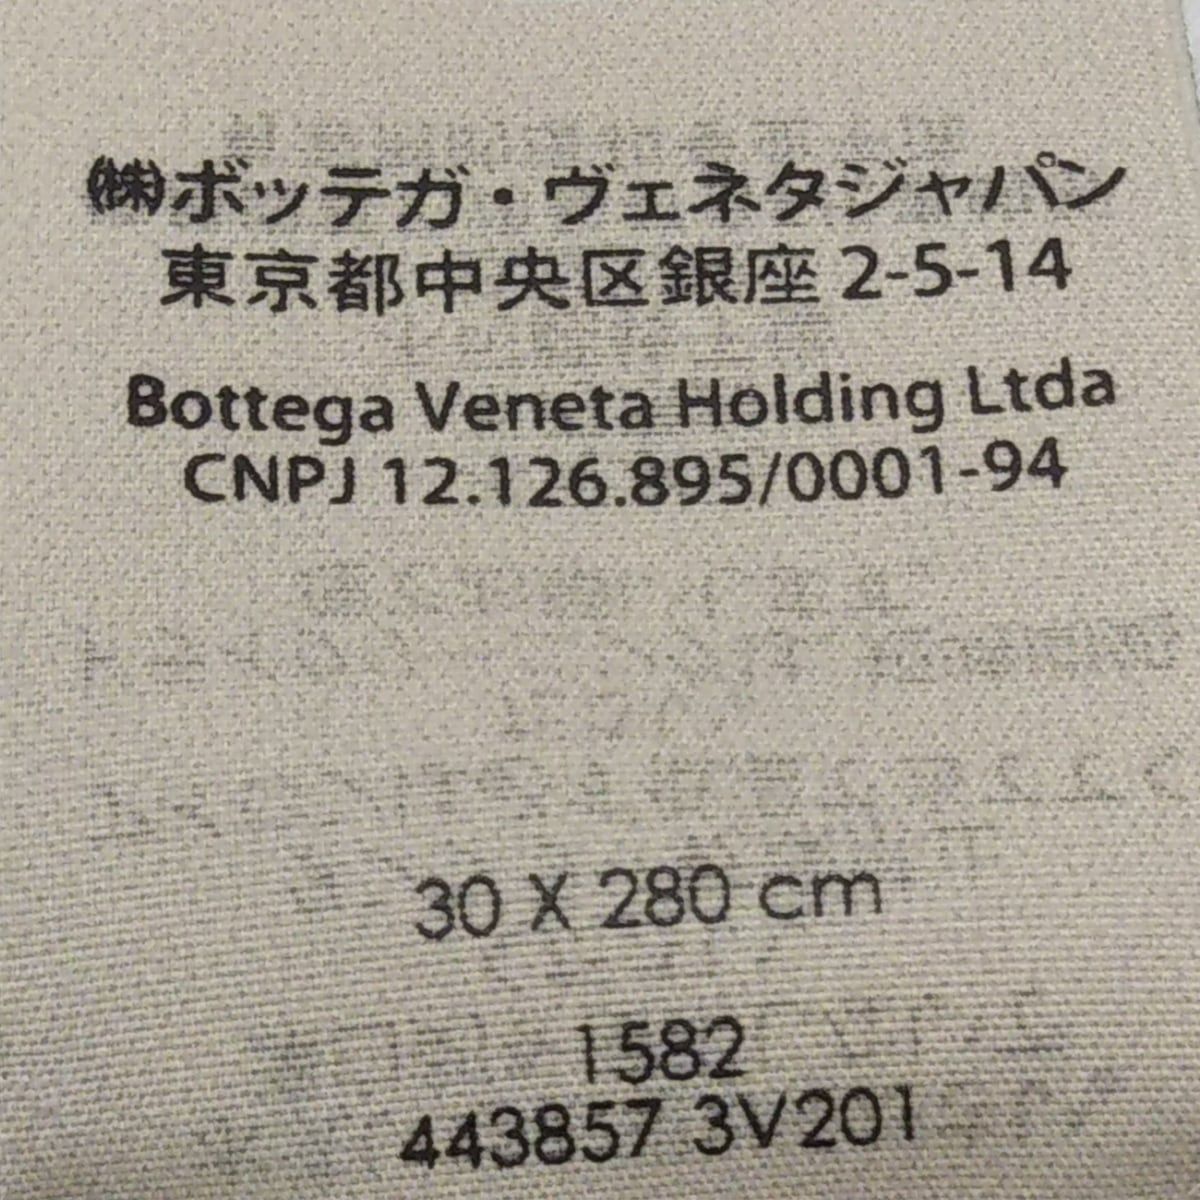 BOTTEGA VENETA(ボッテガヴェネタ) マフラー美品 443857 白 カシミヤ